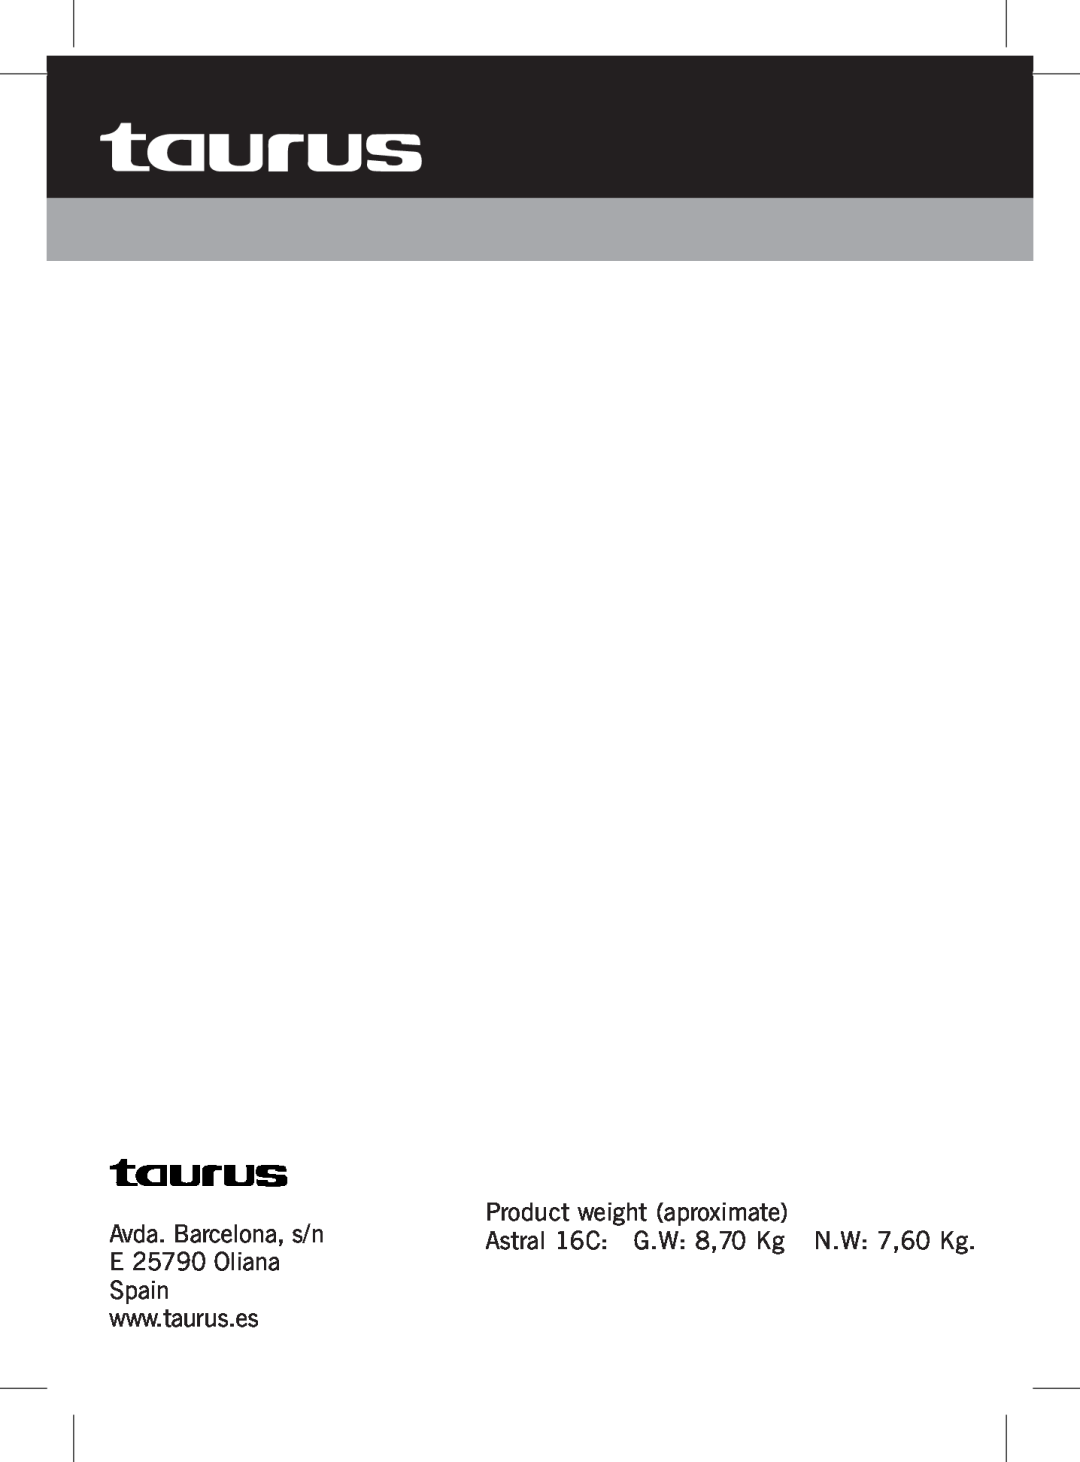 Taurus Group Avda. Barcelona, s/n, Product weight aproximate, Astral 16C G.W 8,70 Kg N.W 7,60 Kg, E 25790 Oliana, Spain 